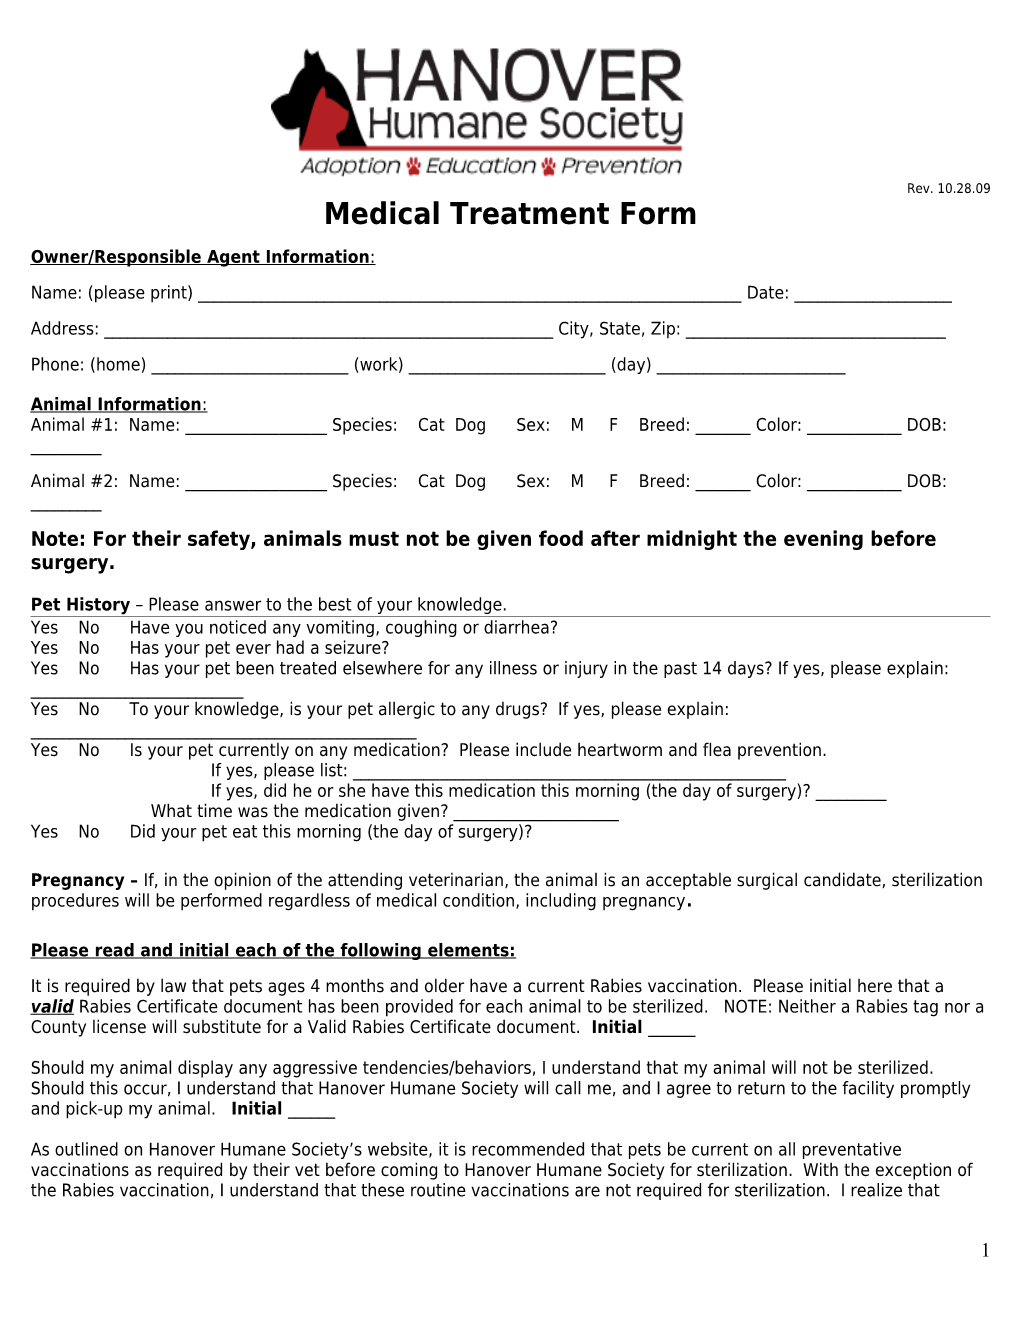 Richmond Spca Medical Consent Form